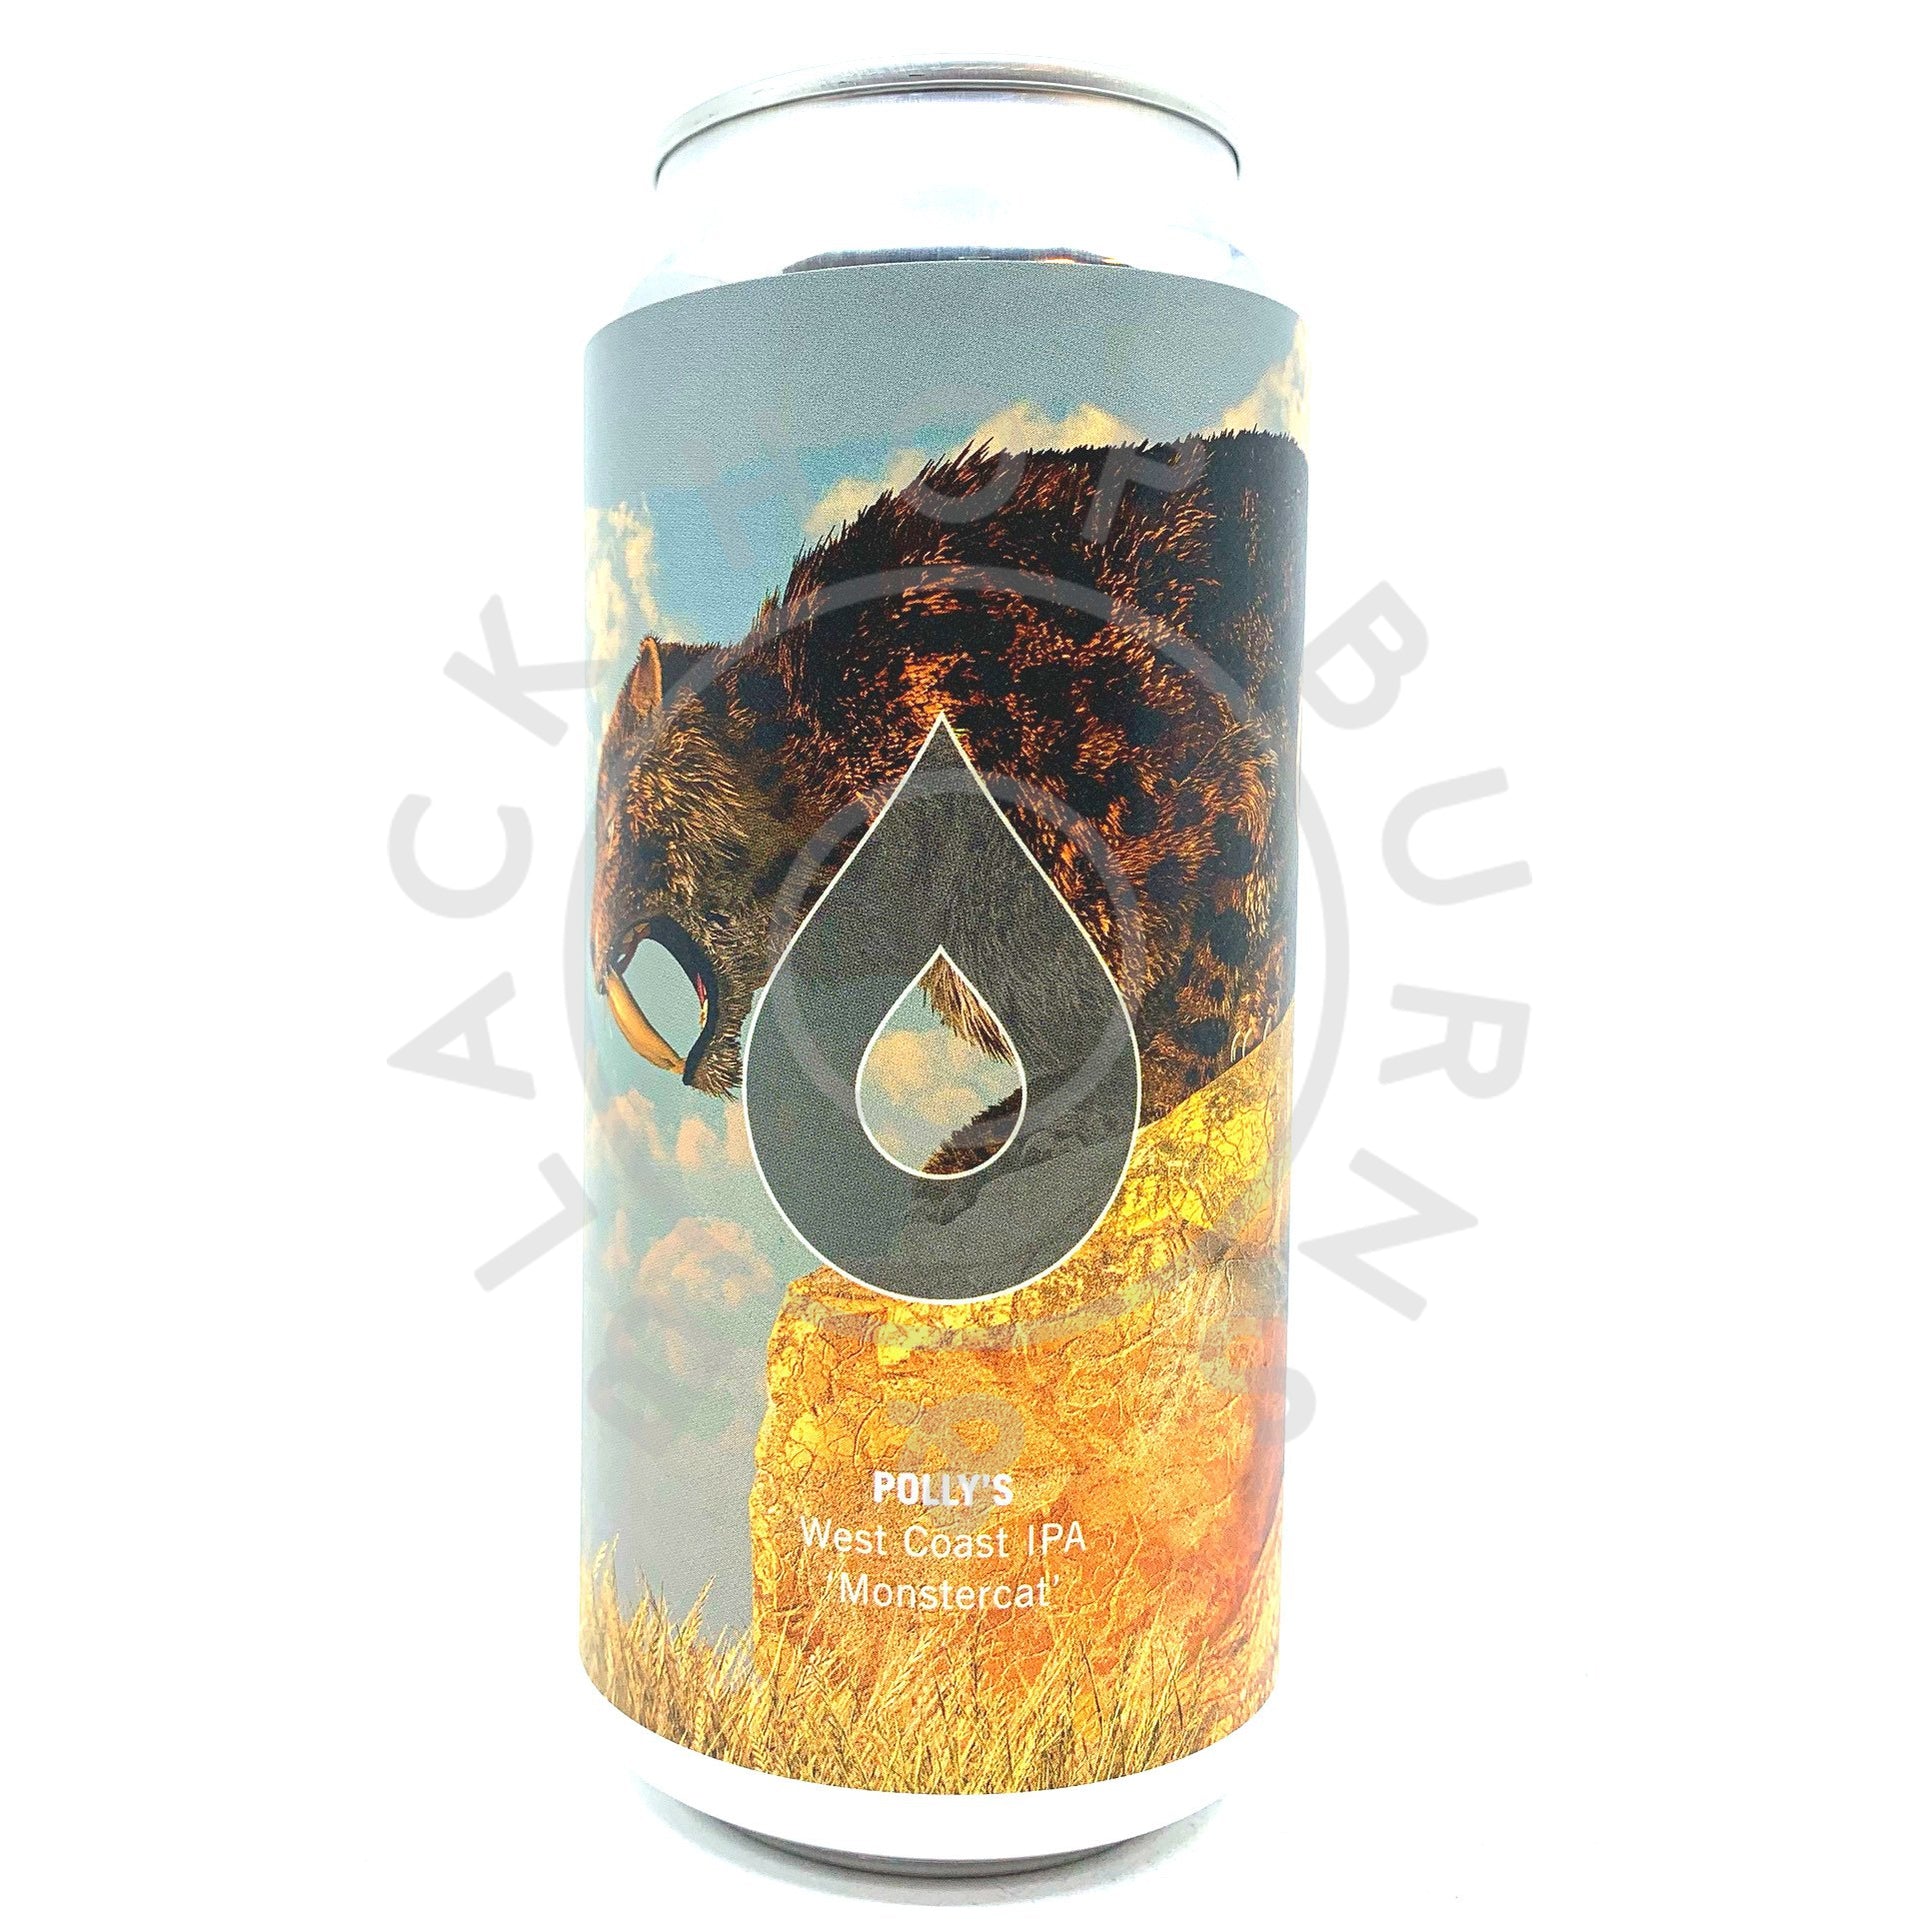 Polly's Brew Co Monstercat West Coast IPA 7.1% (440ml can)-Hop Burns & Black